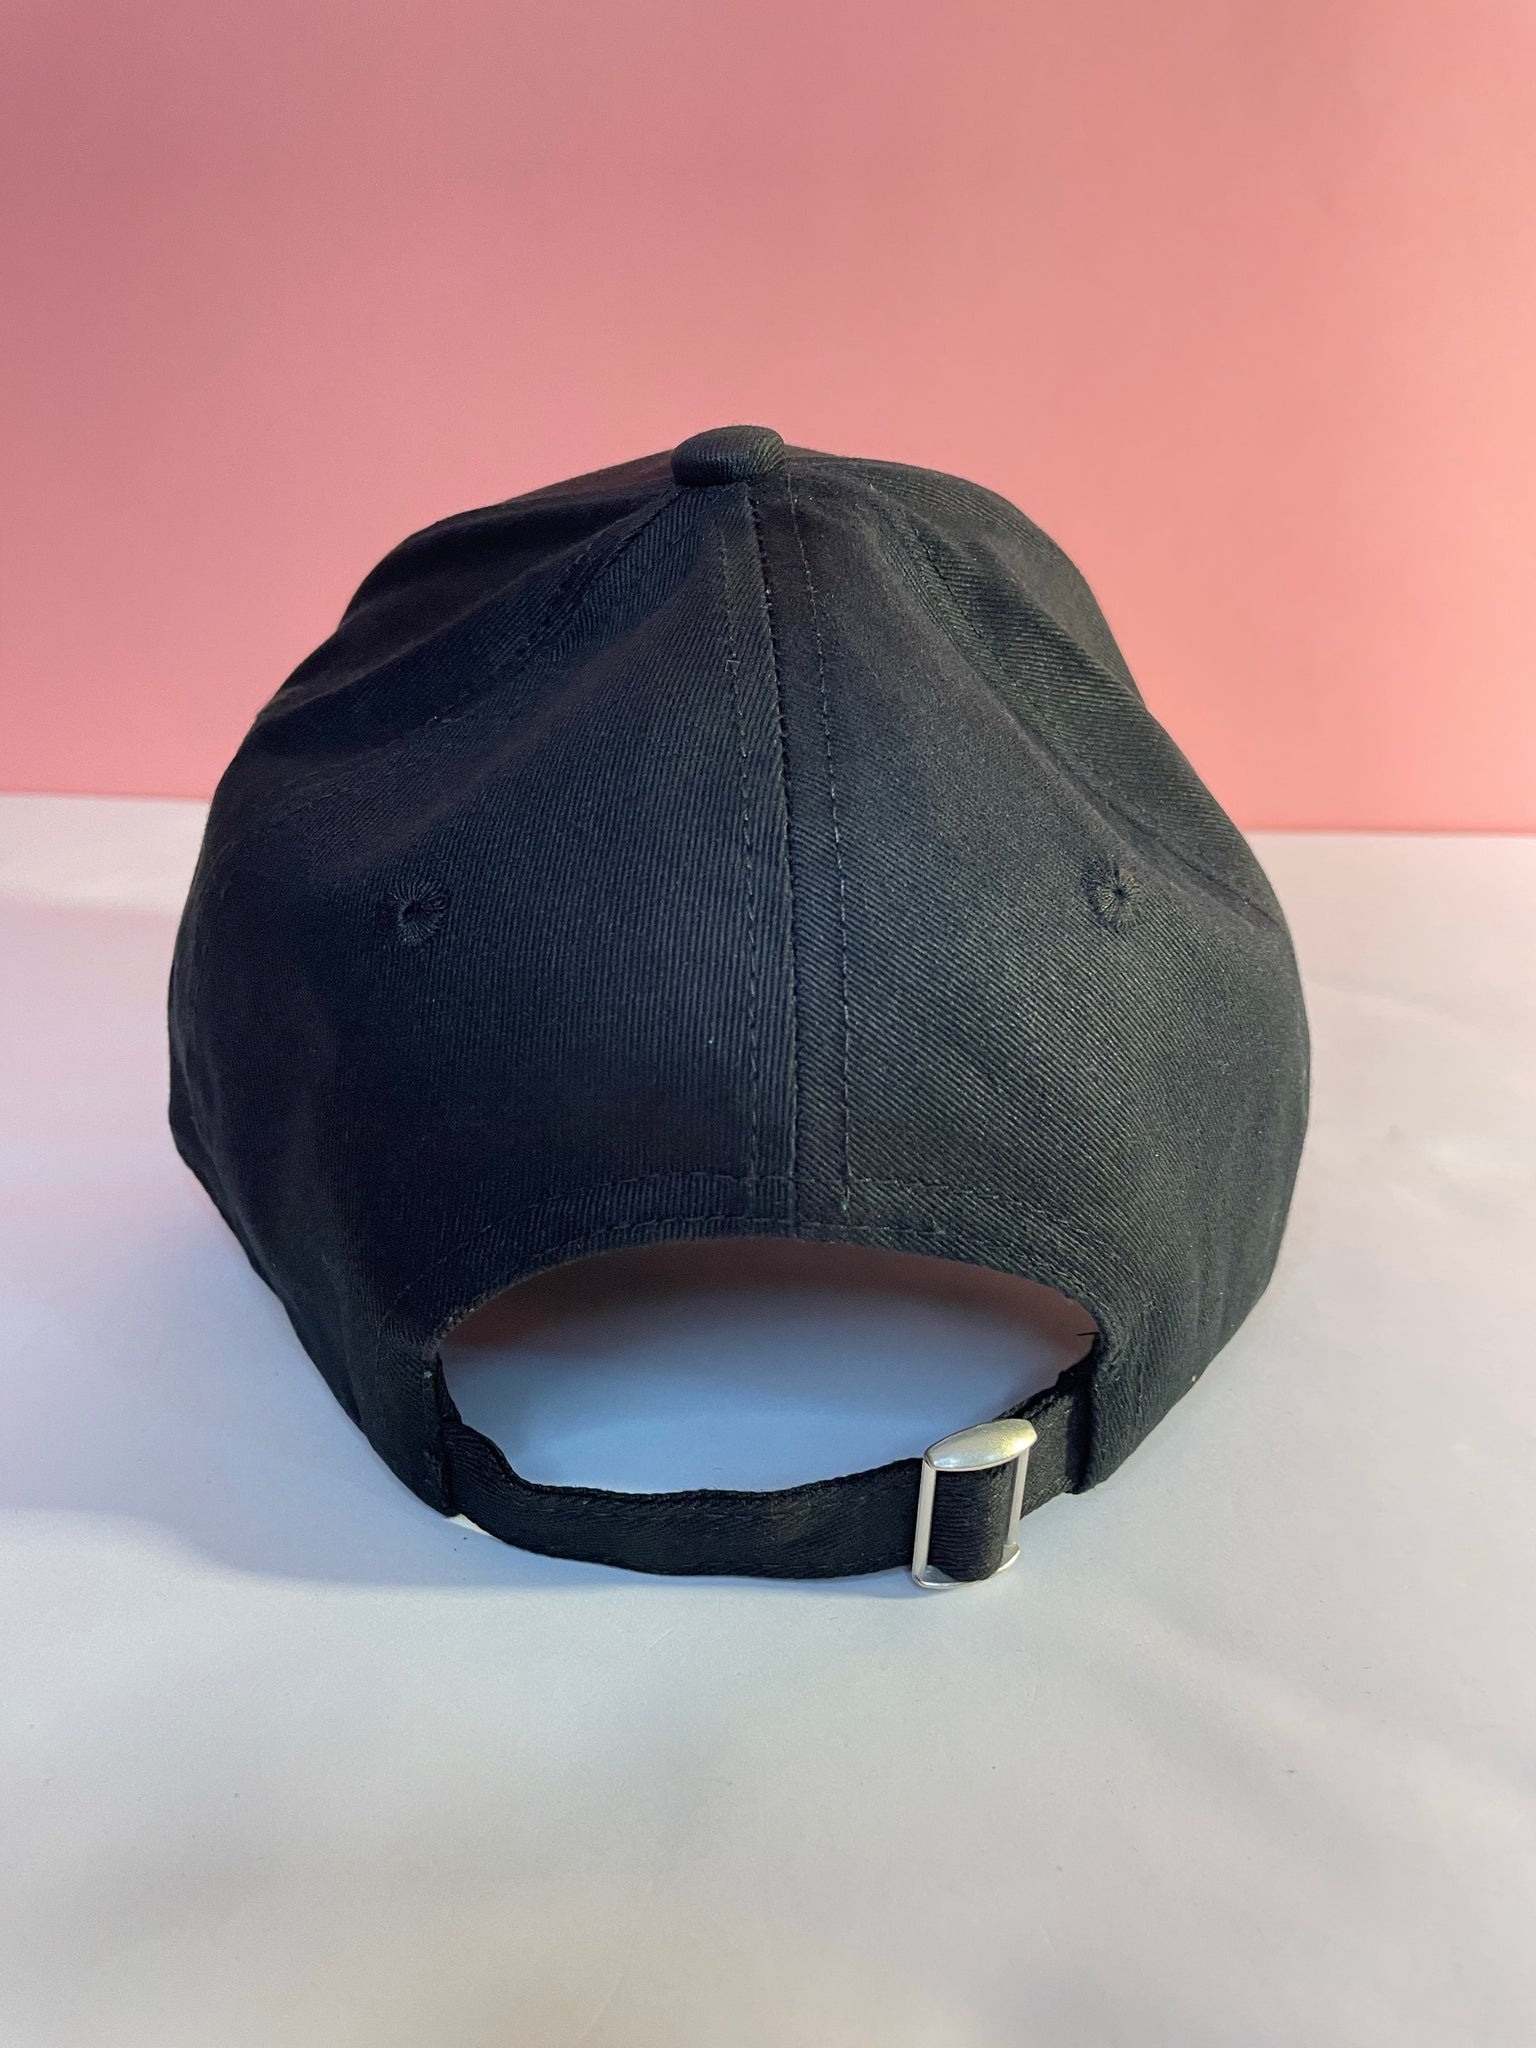 I Speak Fluent French Designers Ball Cap Hat